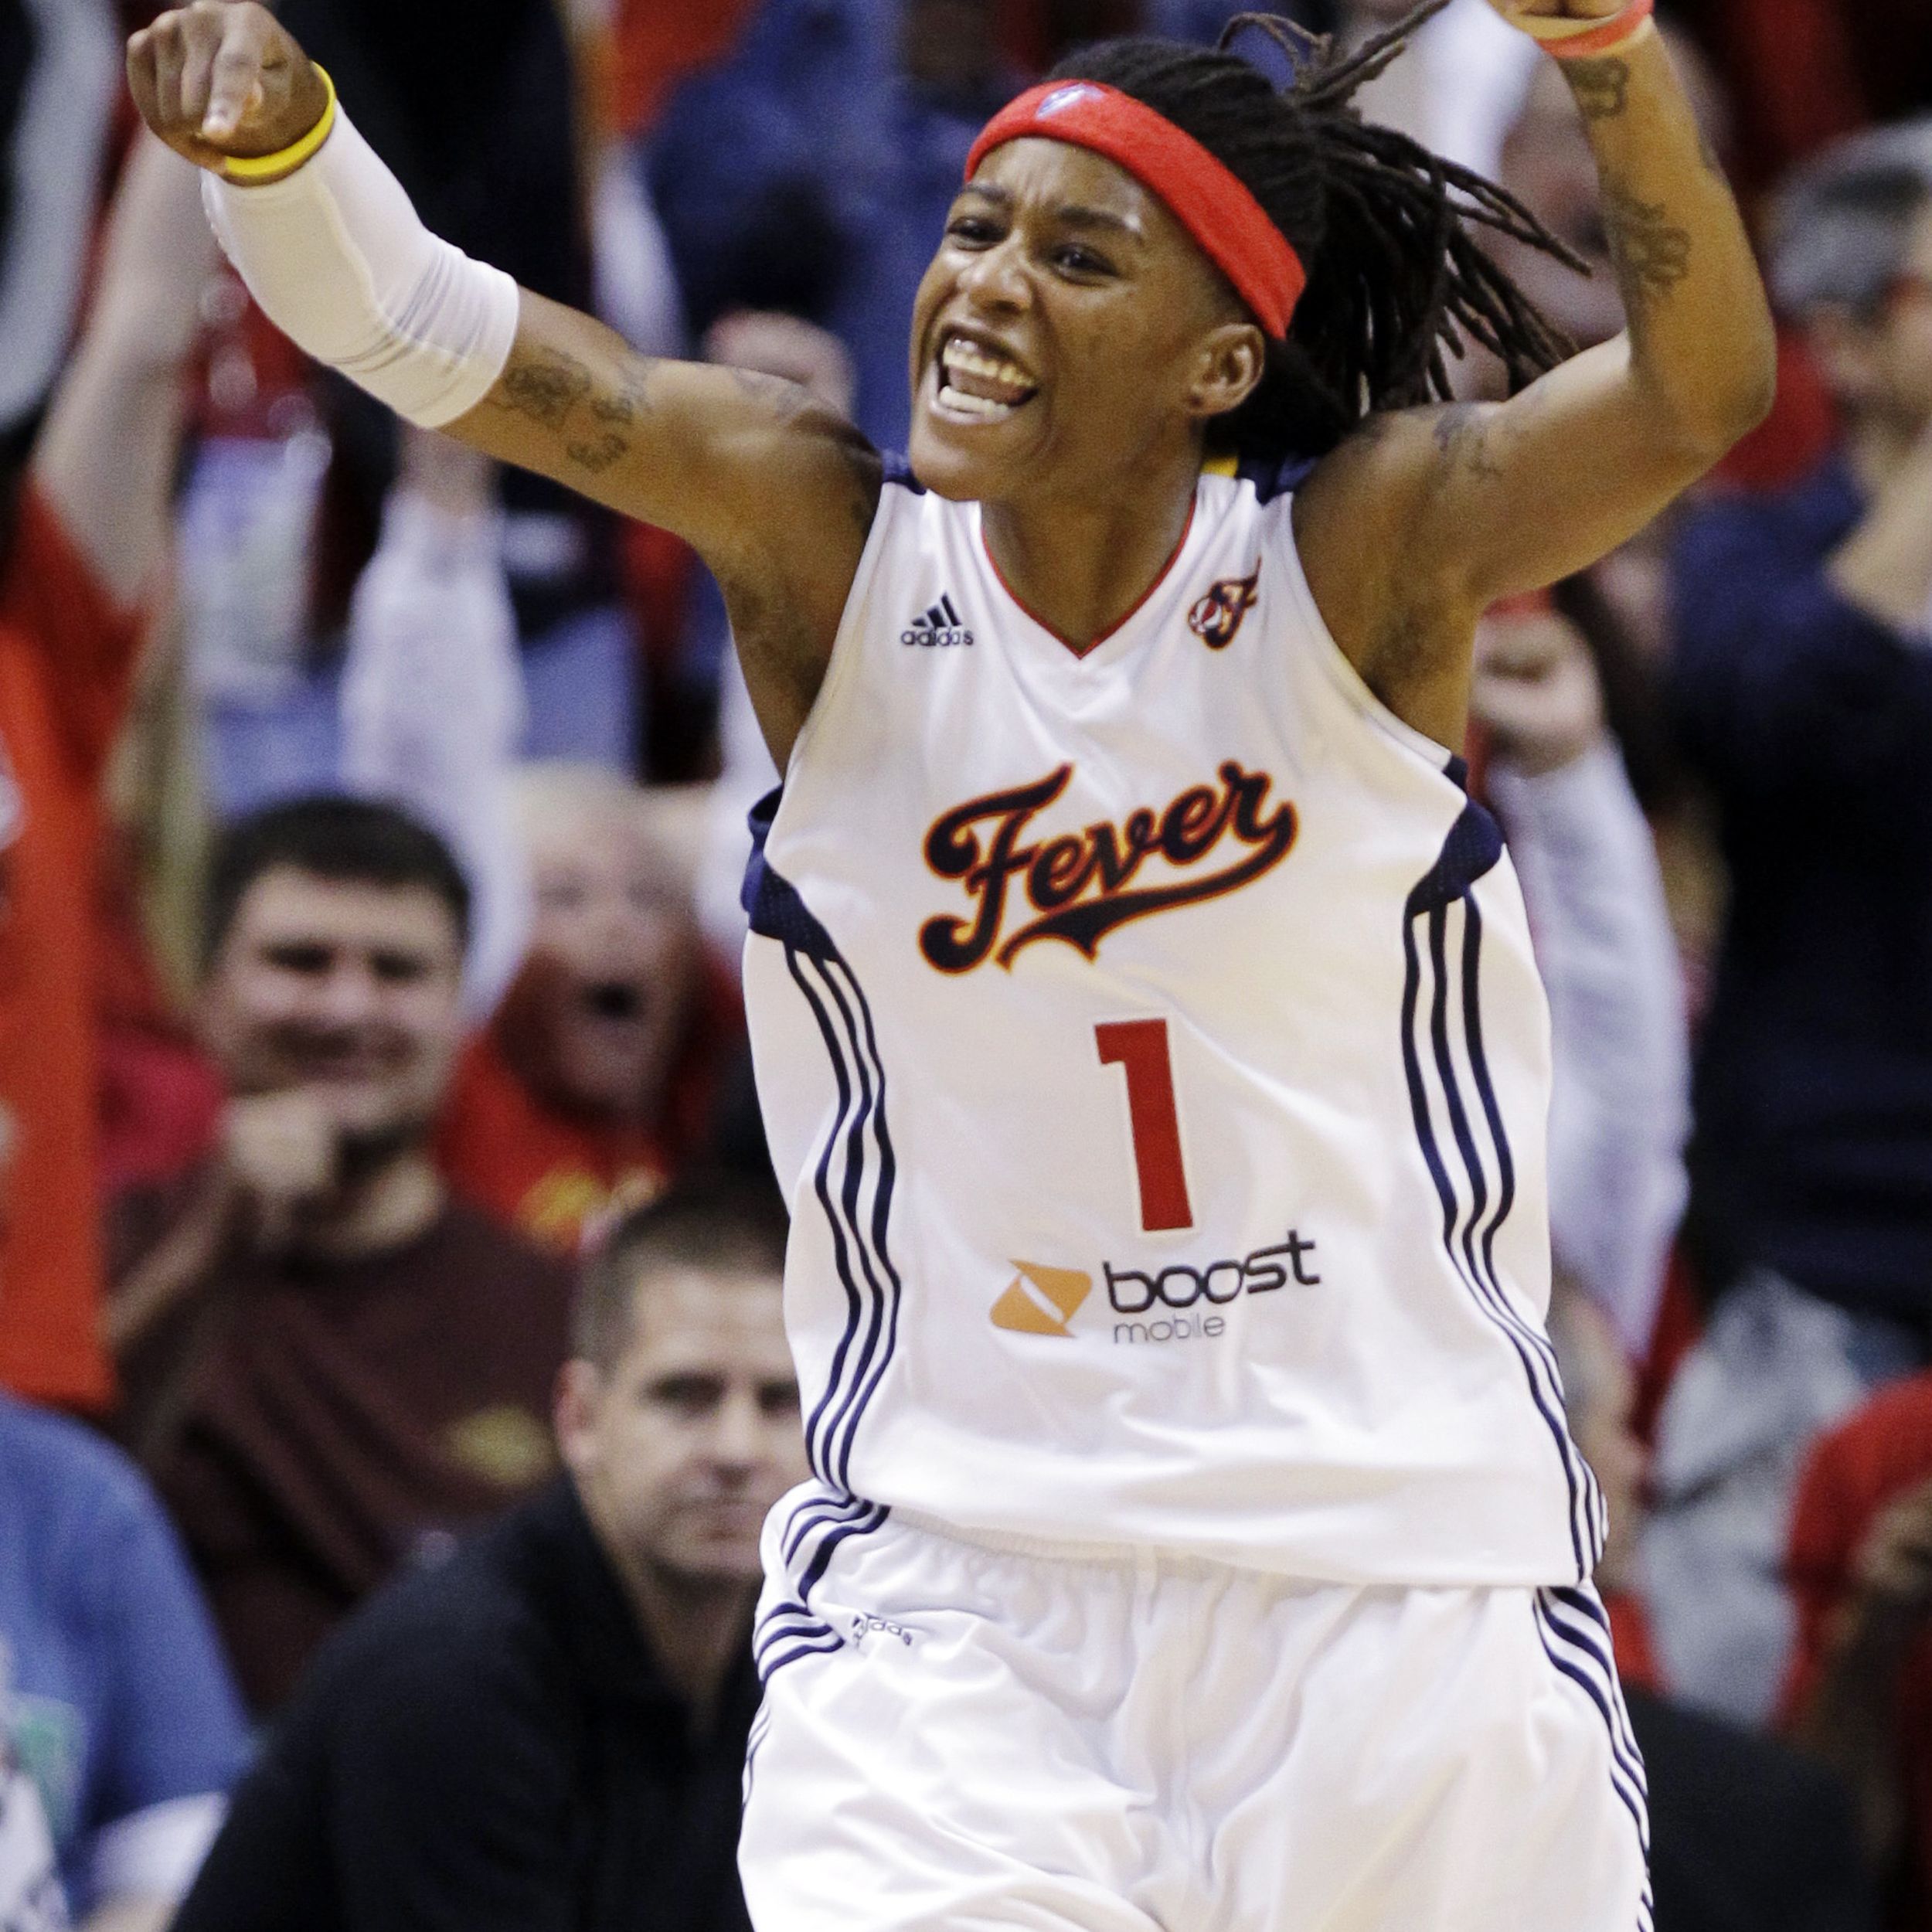 WNBA Indiana Fever 2012 championship ring. Sponor kroger ring